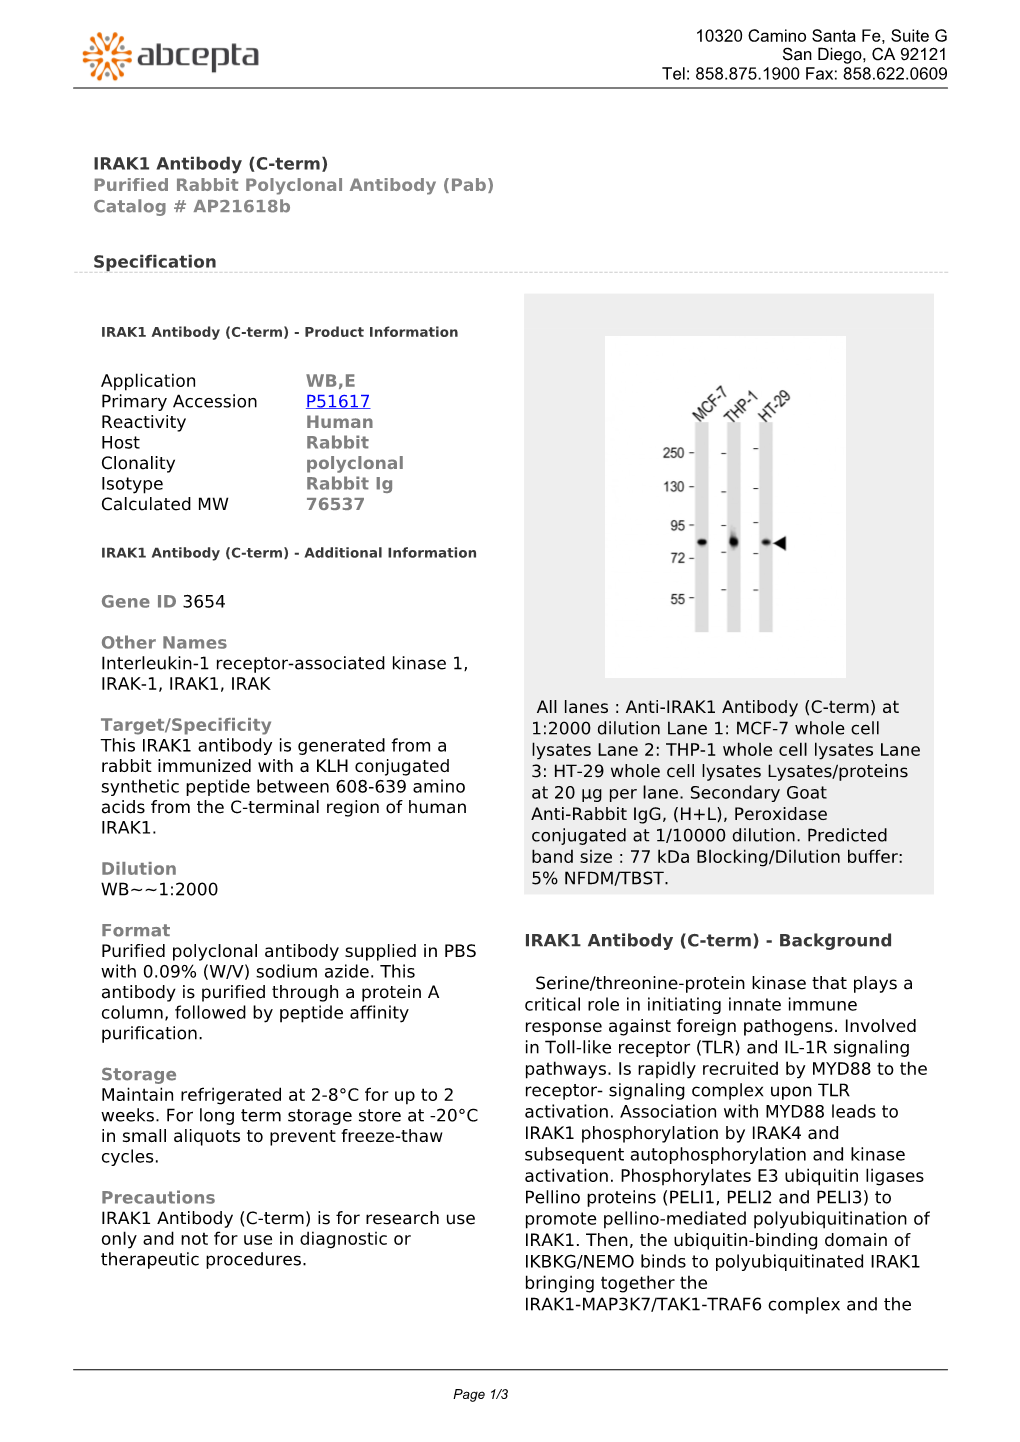 IRAK1 Antibody (C-Term) Purified Rabbit Polyclonal Antibody (Pab) Catalog # Ap21618b